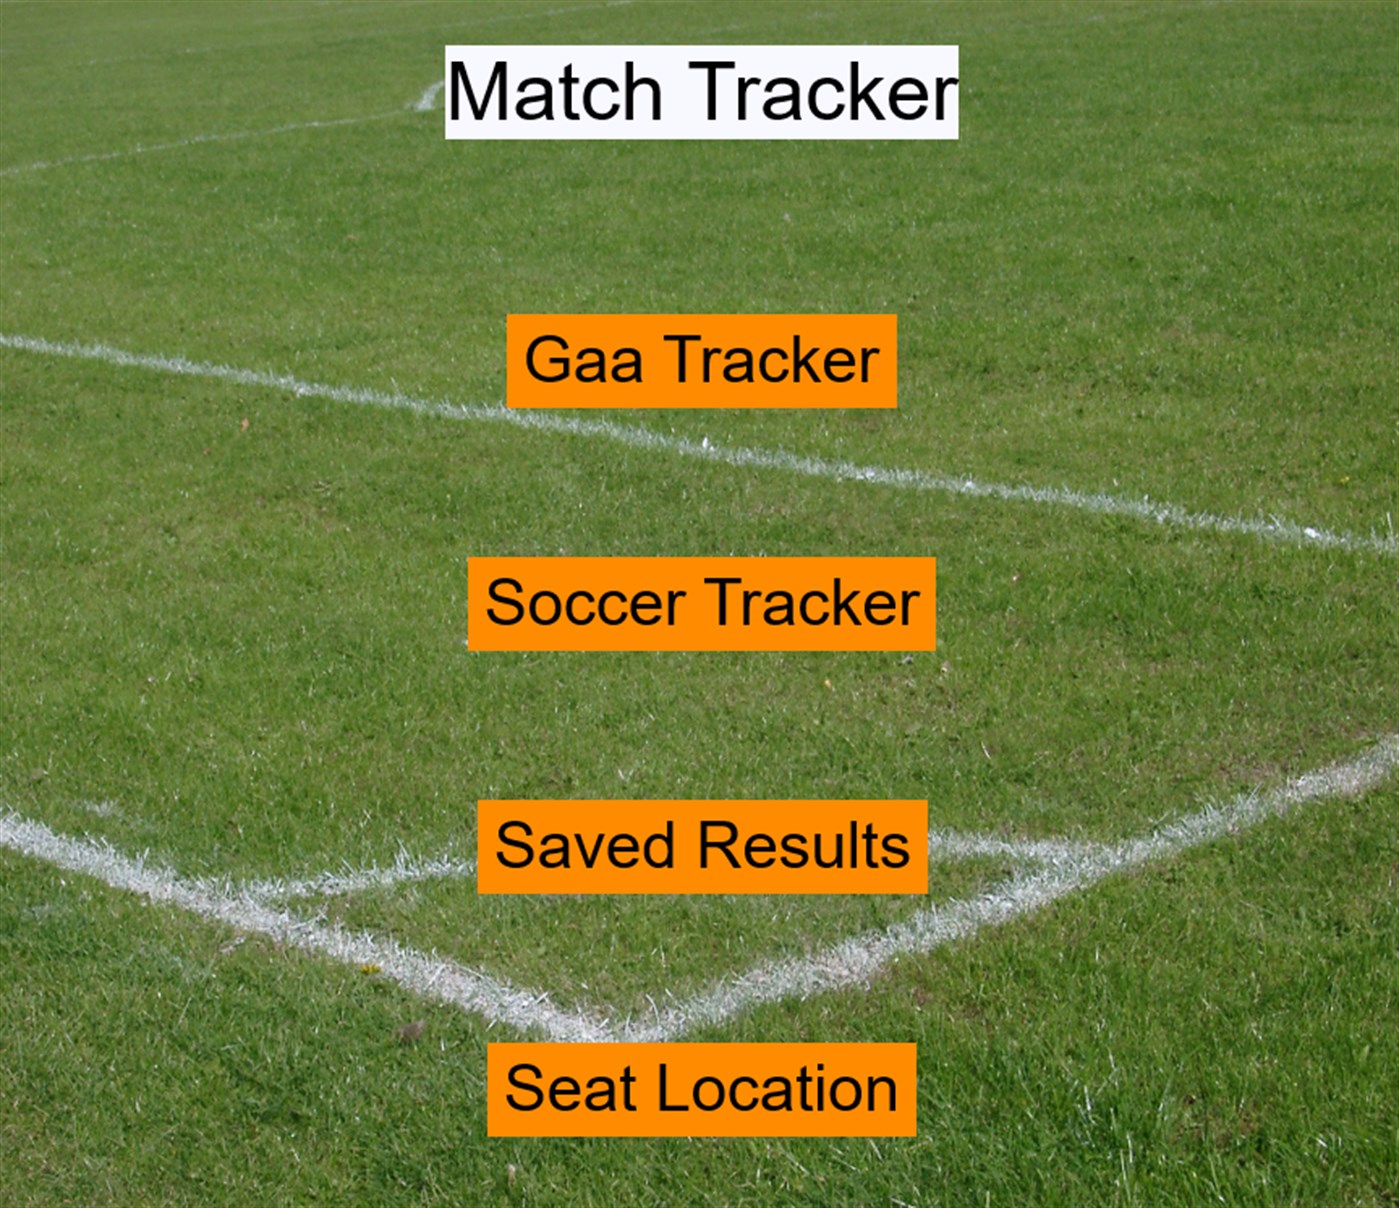 Match a track. Match Tracker.